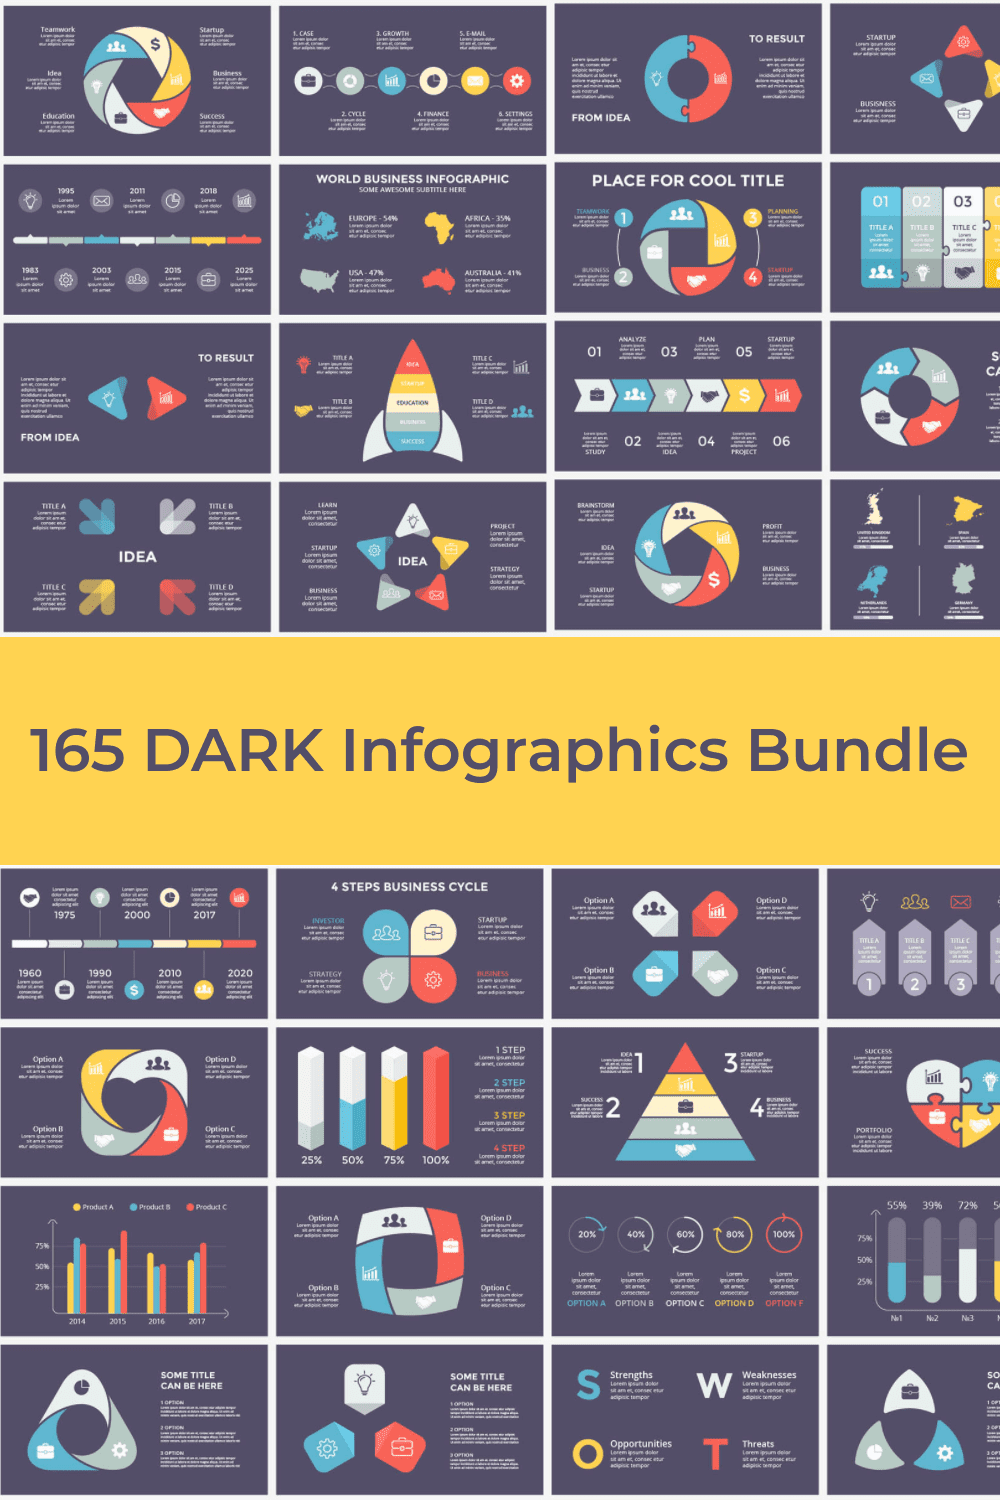 165 DARK Infographics Bundle - MasterBundles - Pinterest Collage Image.